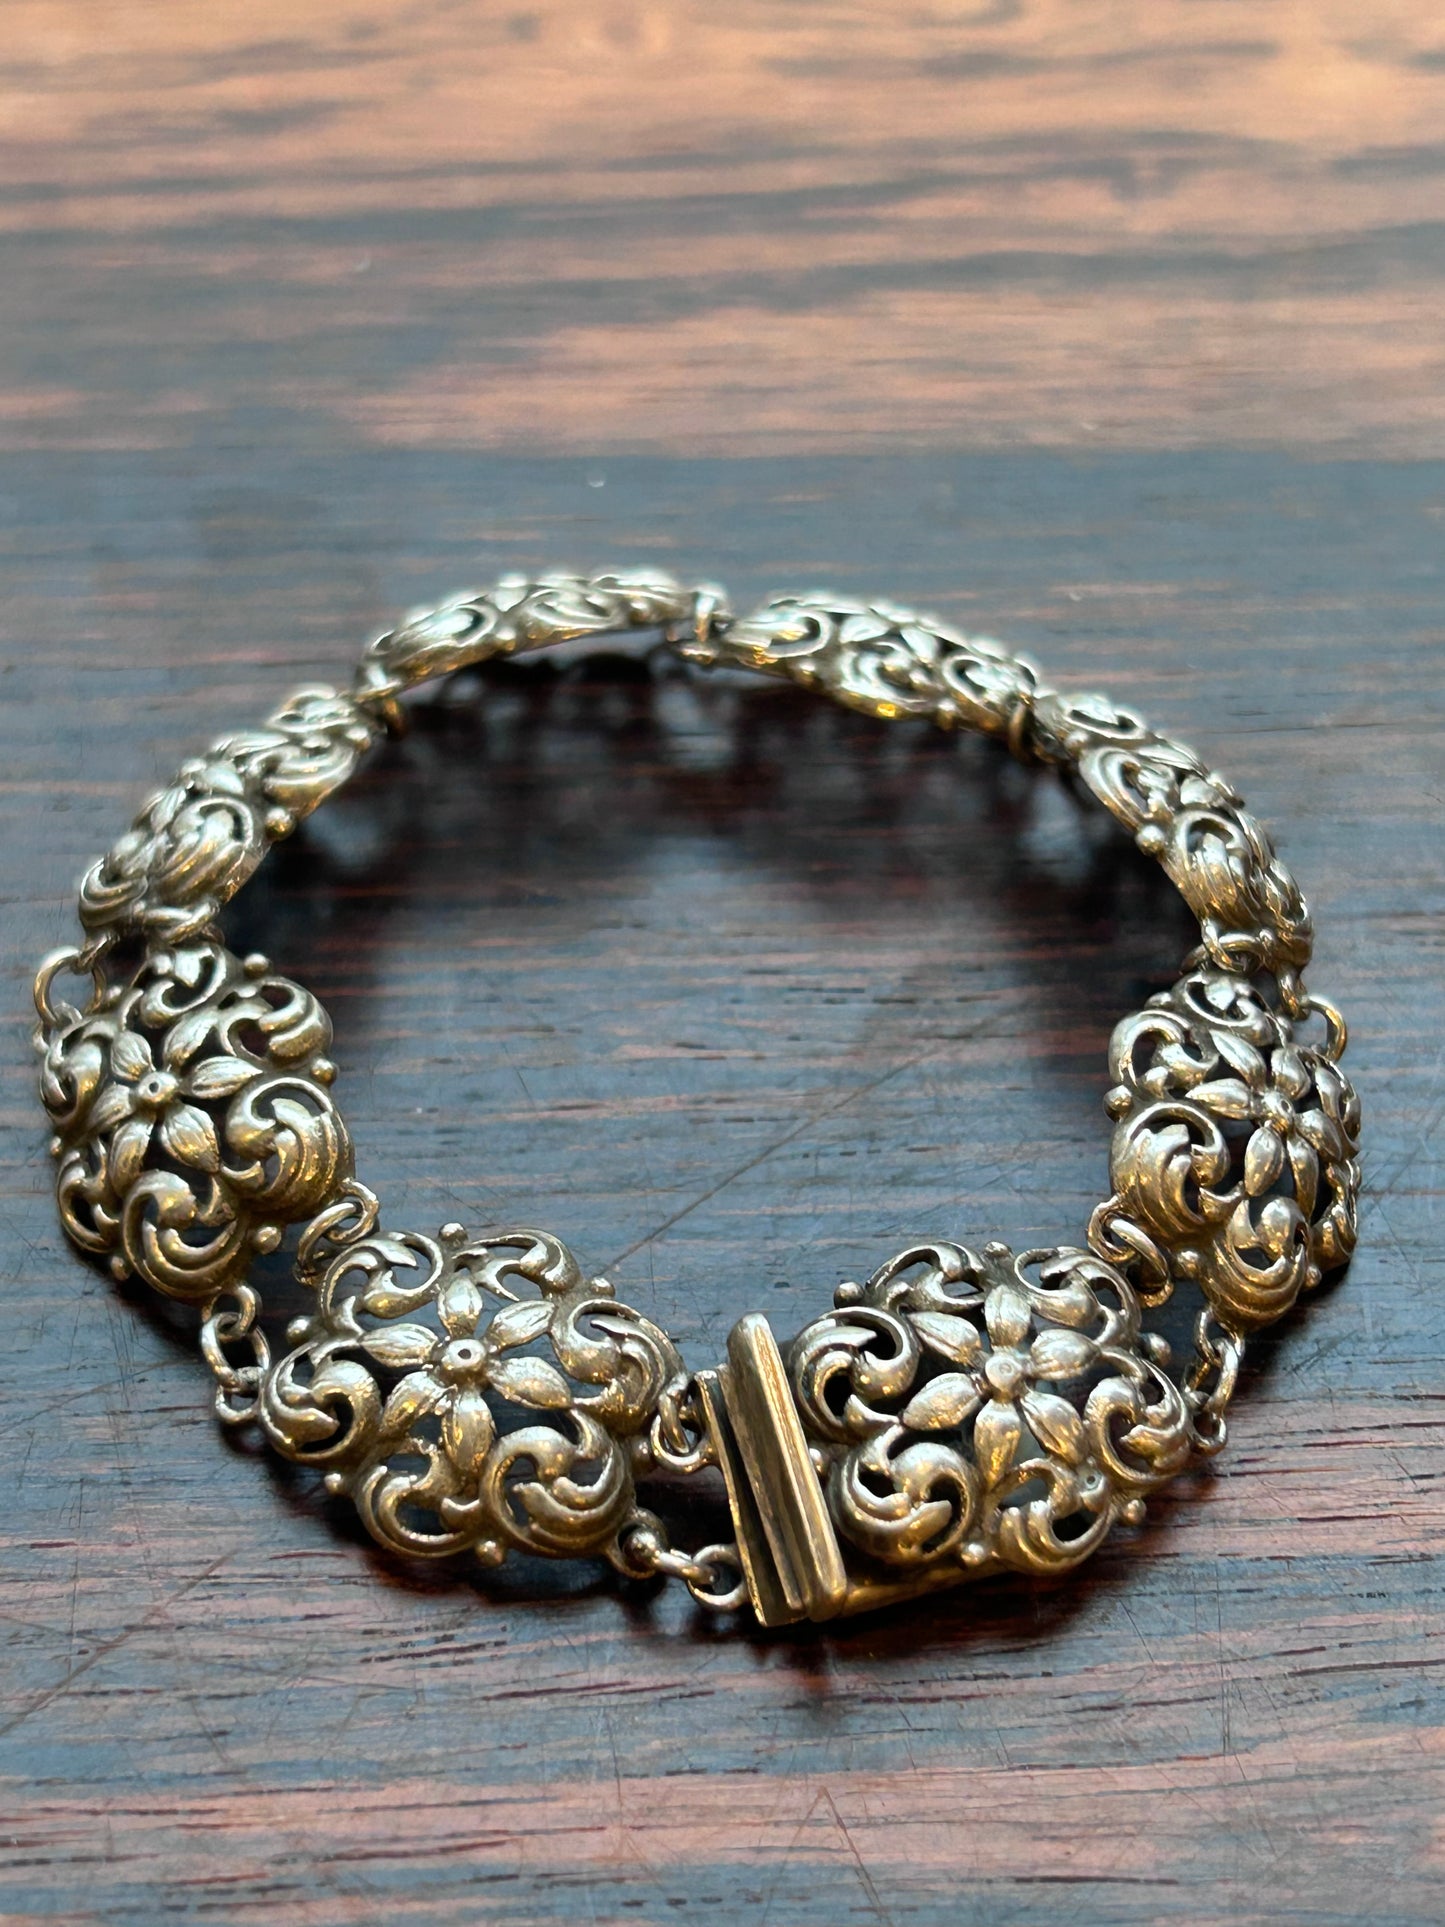 Silver bracelet with floral motifs  - Georg Kaplan 1954